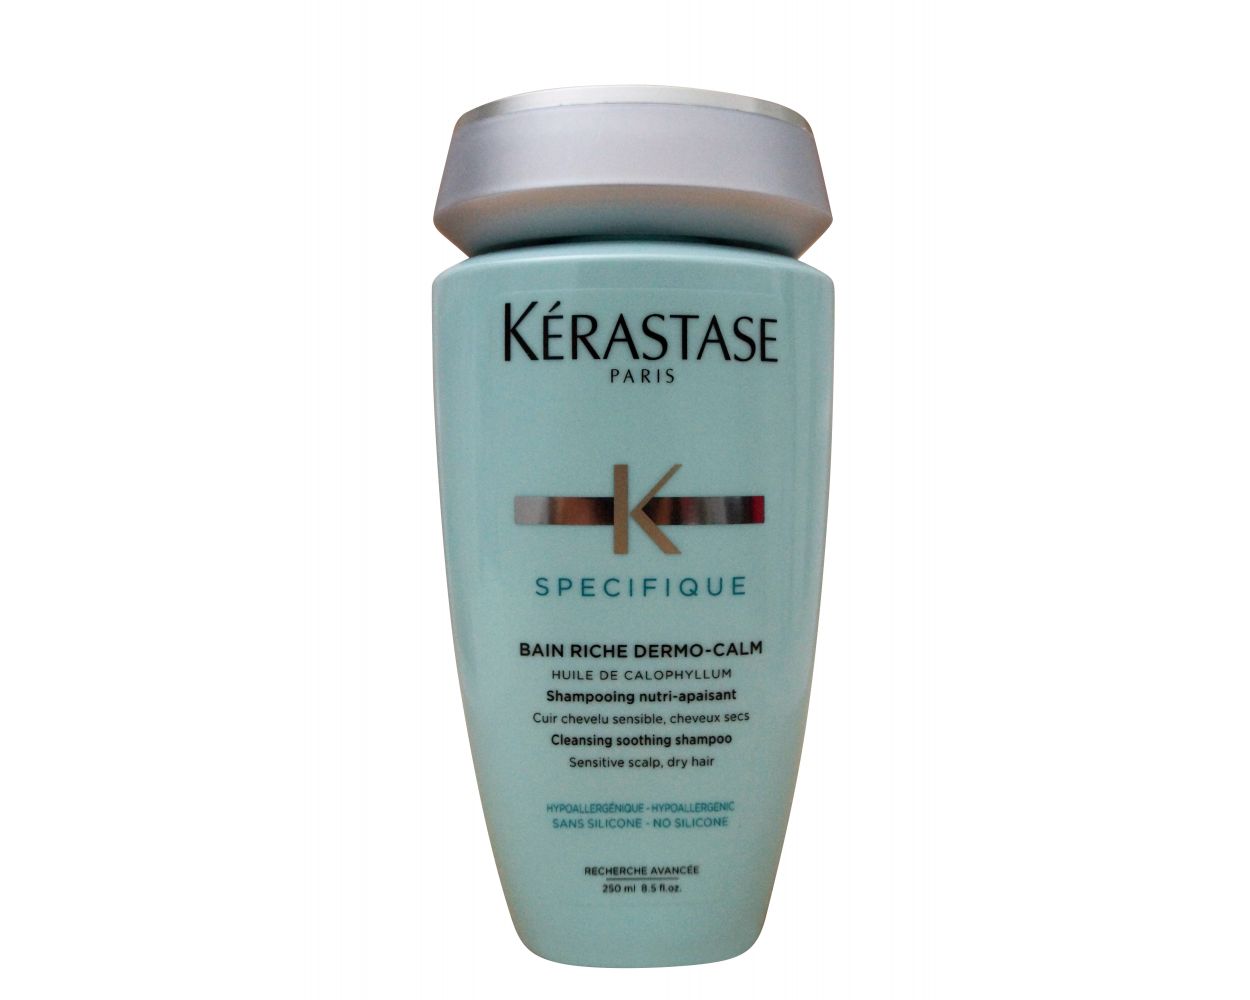 Kerastase Bain Riche Shampoo Sensitive Dry Hair | Shampoo - Beautyvice.com